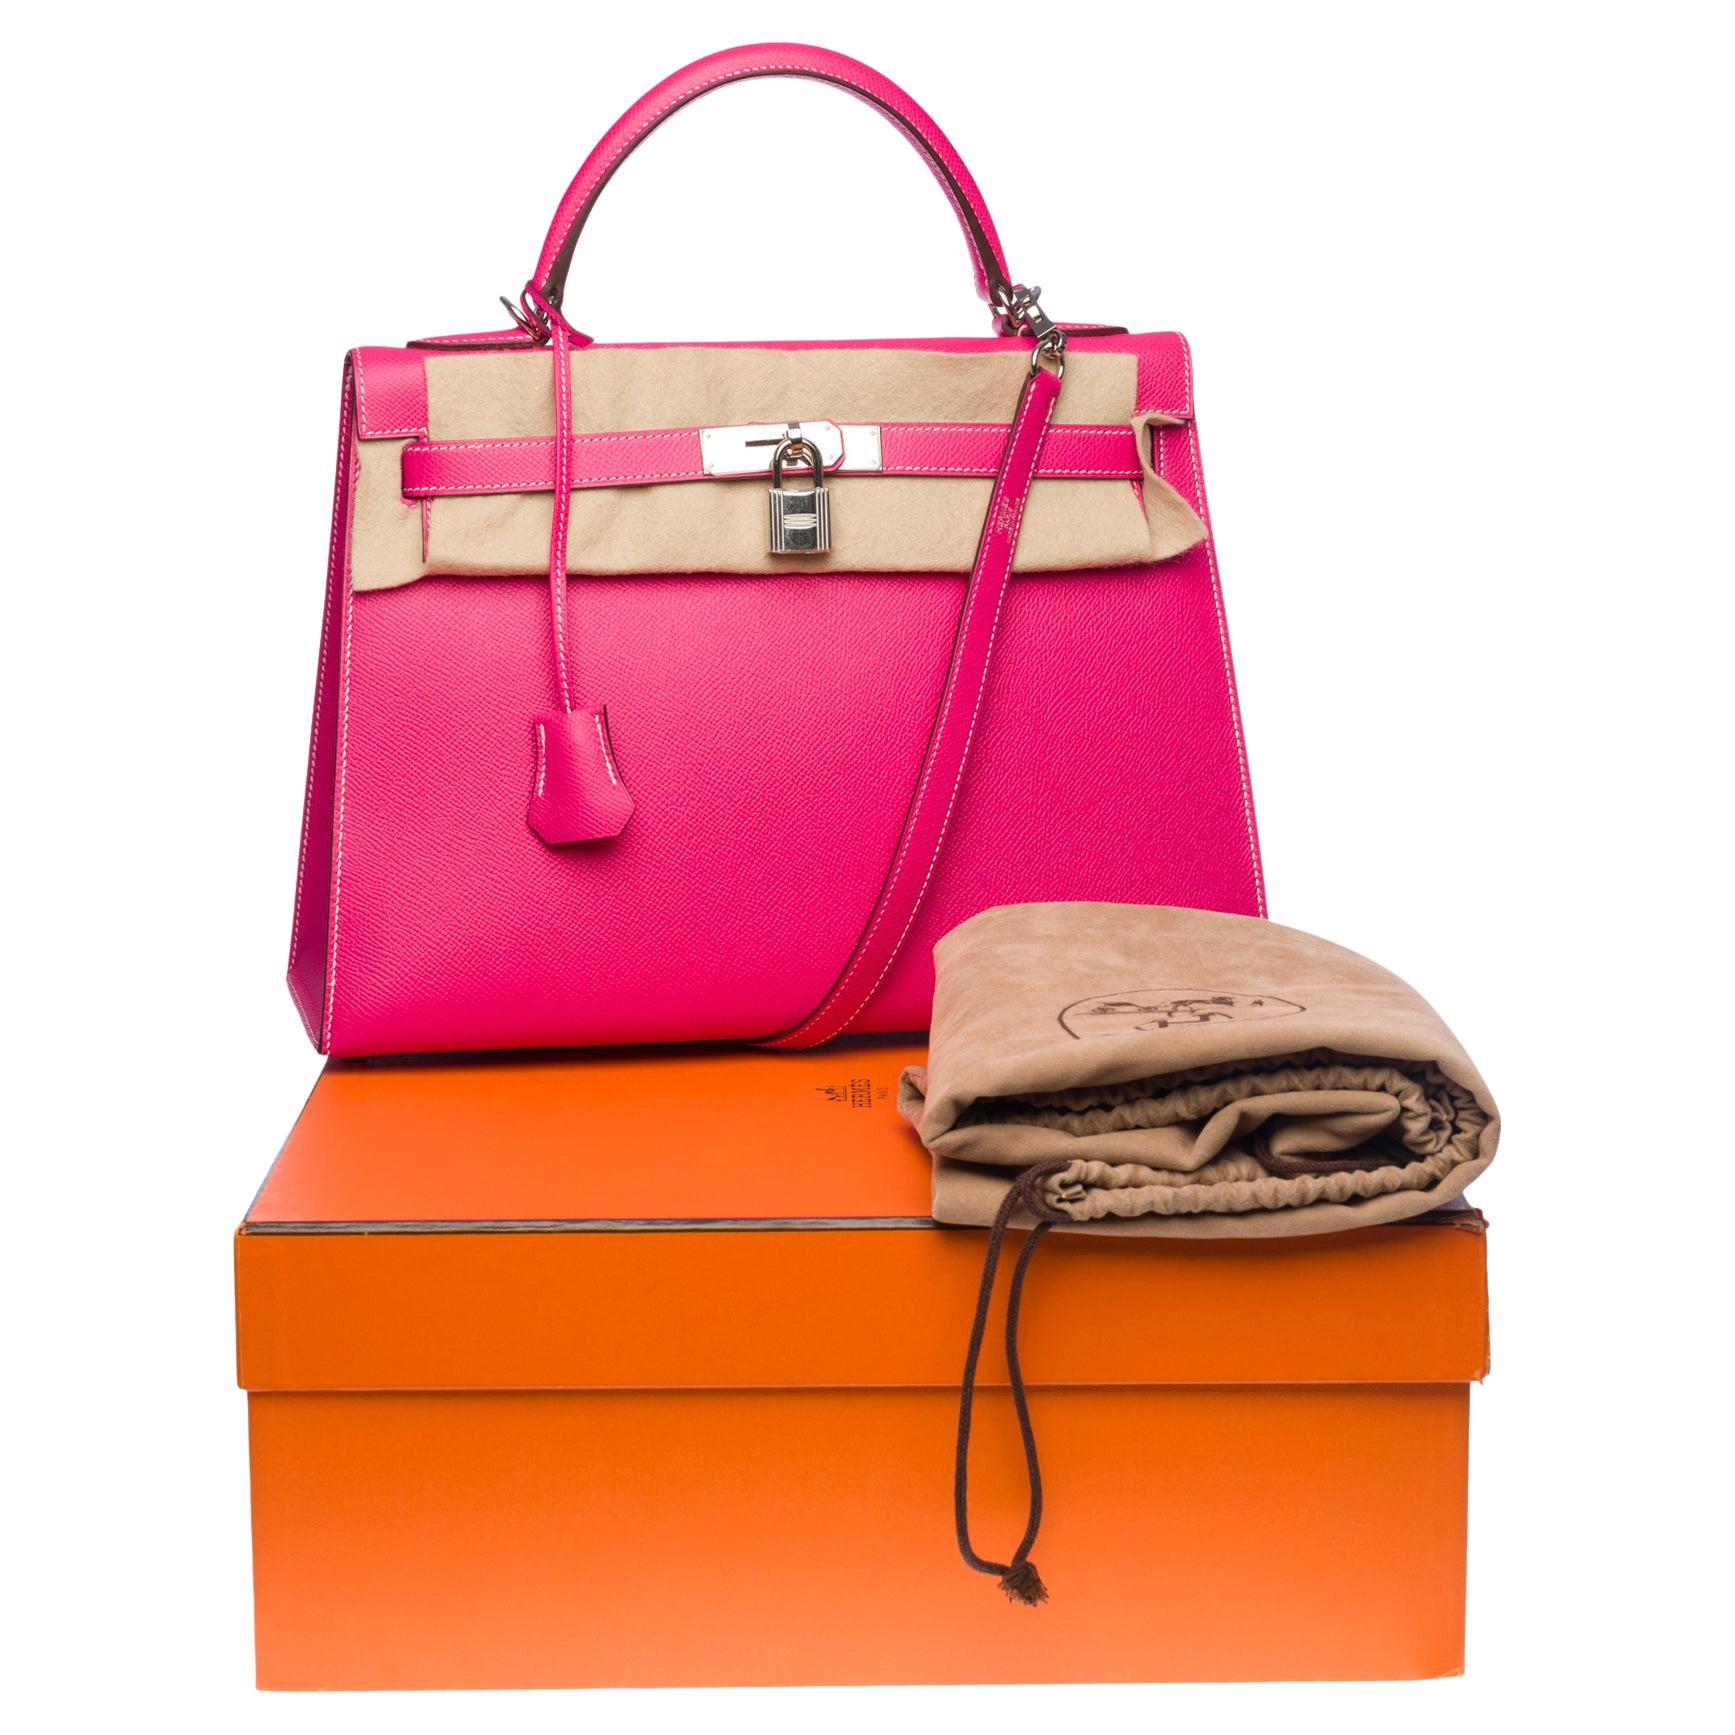 Hermès Kelly 32 sellier handbag strap in Rose lipstick epsom leather, SHW